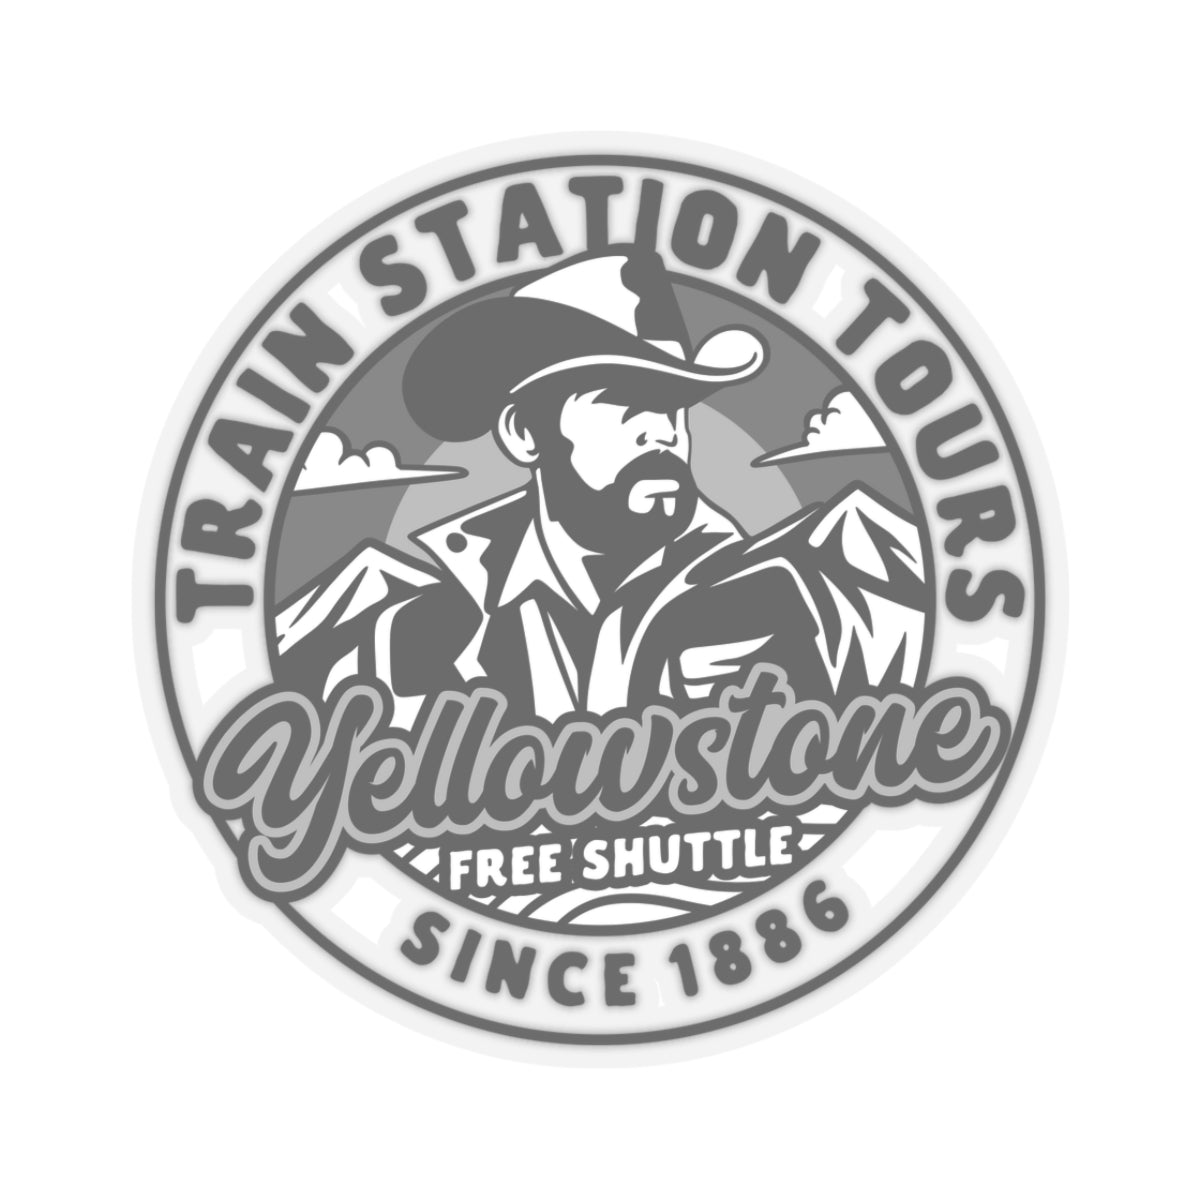 Yellowstone Train Station Tours Sticker